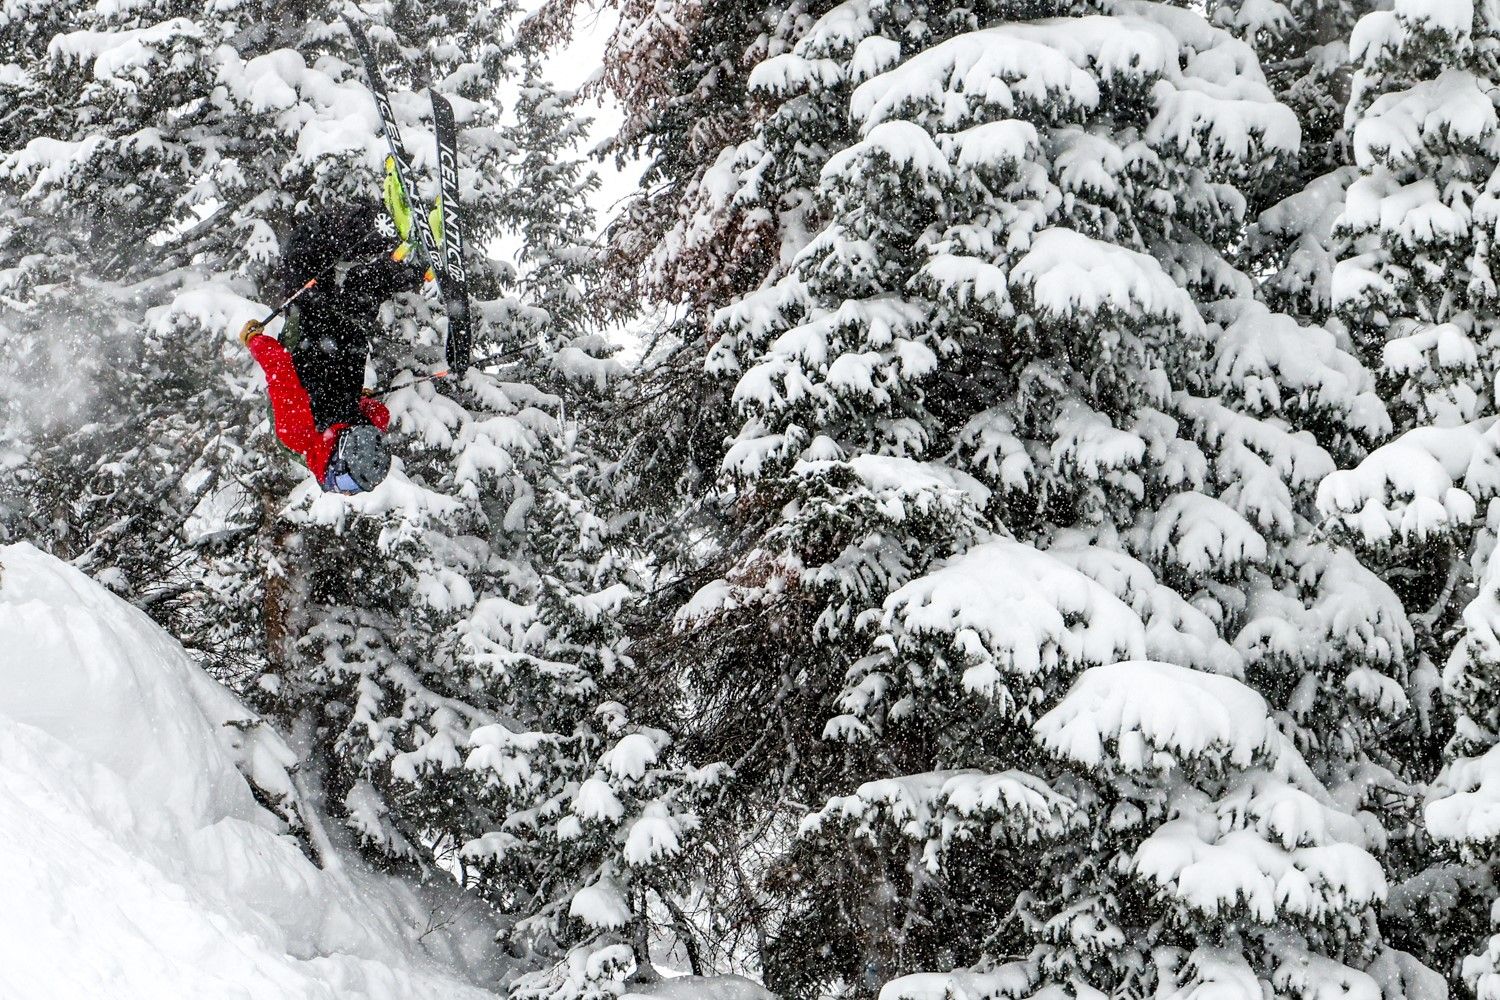 A skier flips for an amazing powder day in Colorado Ski Country USA. Photo courtesy: Loveland Ski Area.